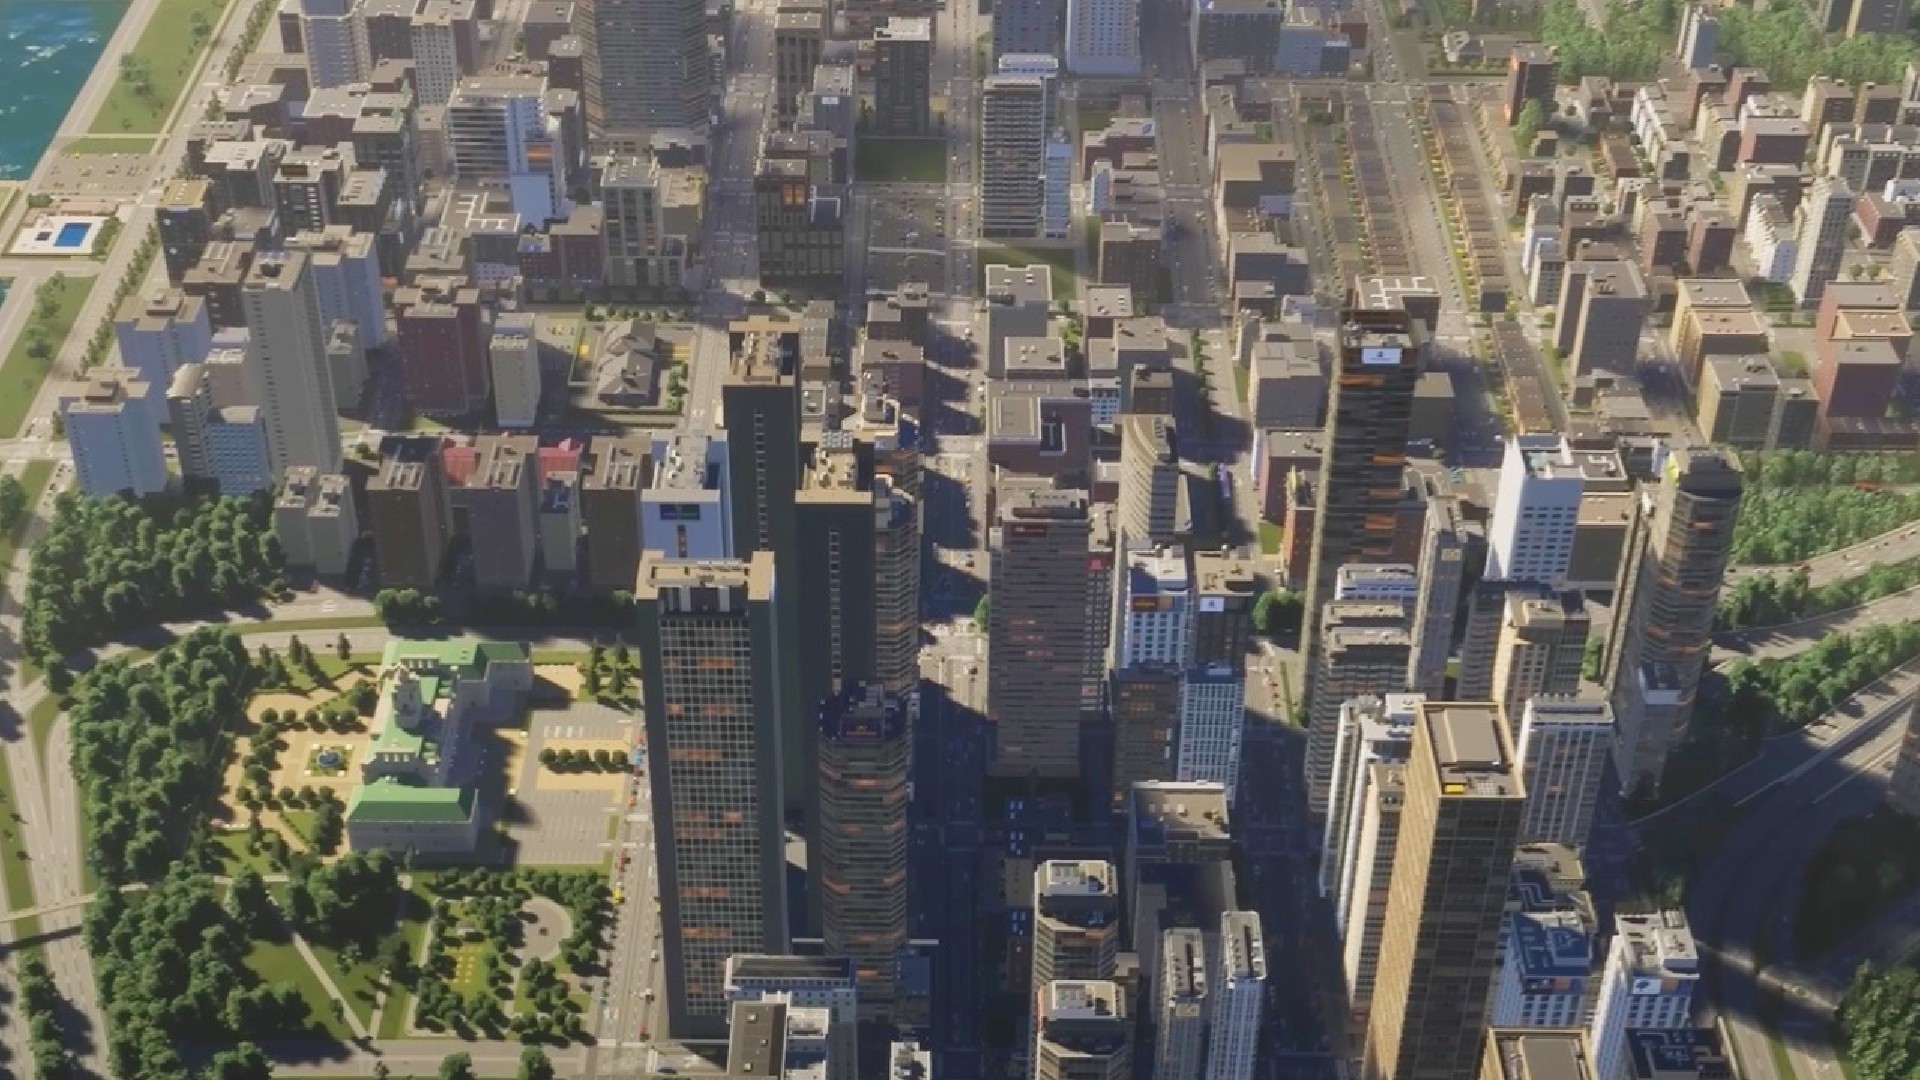 Cities Skylines 2 devs see “no benefit” in fps higher than 30